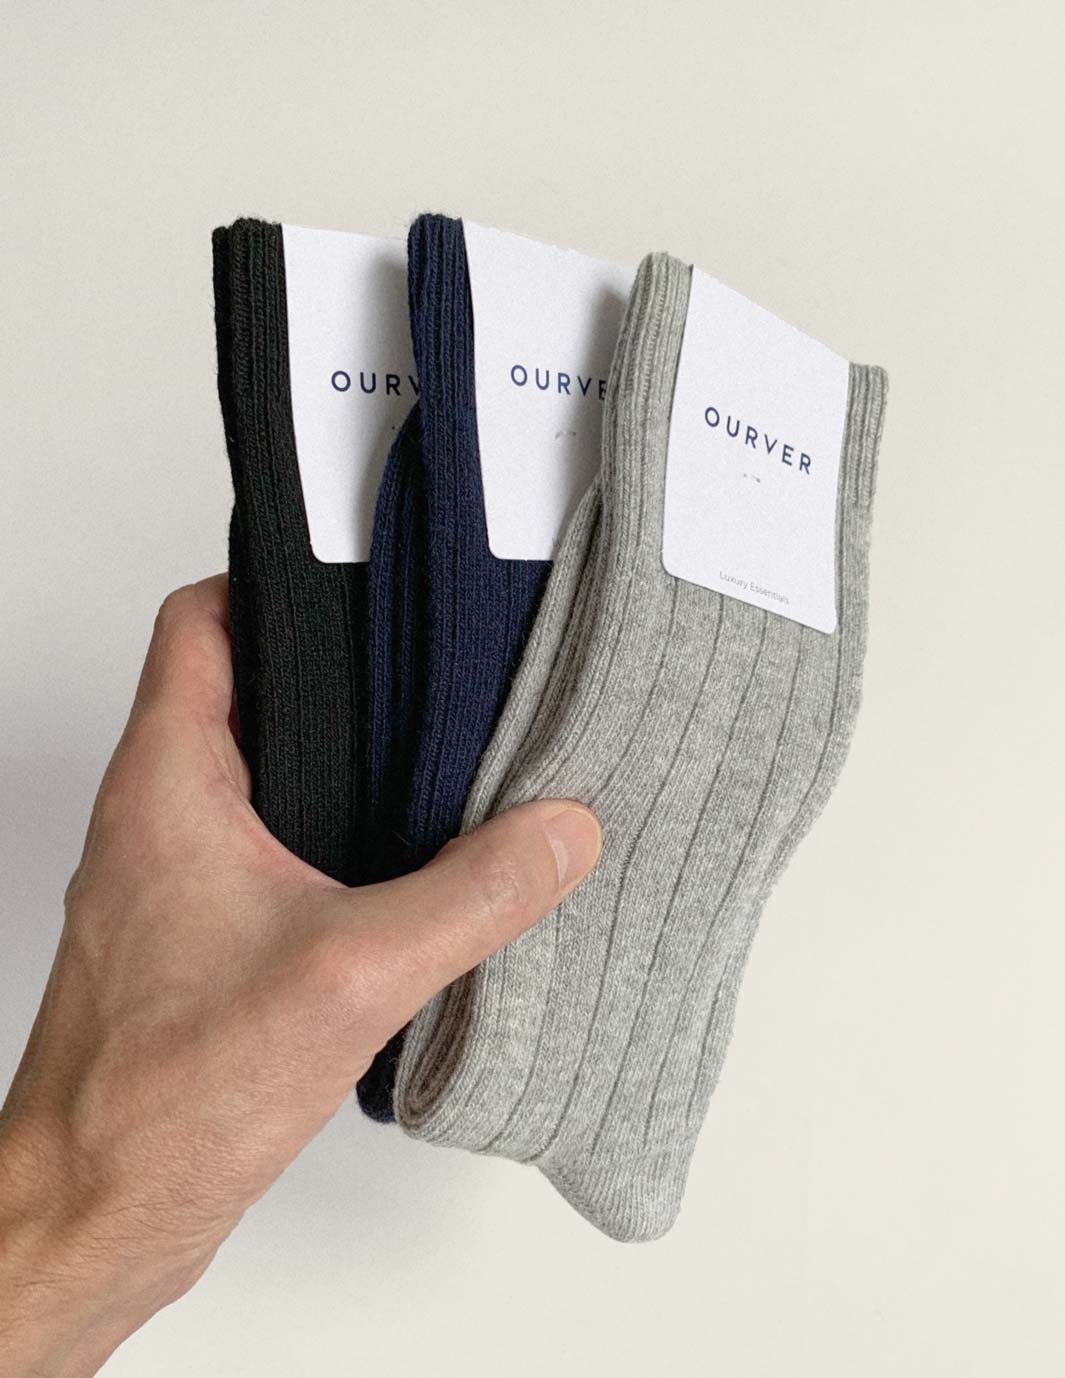 Cashmere and merino wool socks three pack colours grey, navy, black